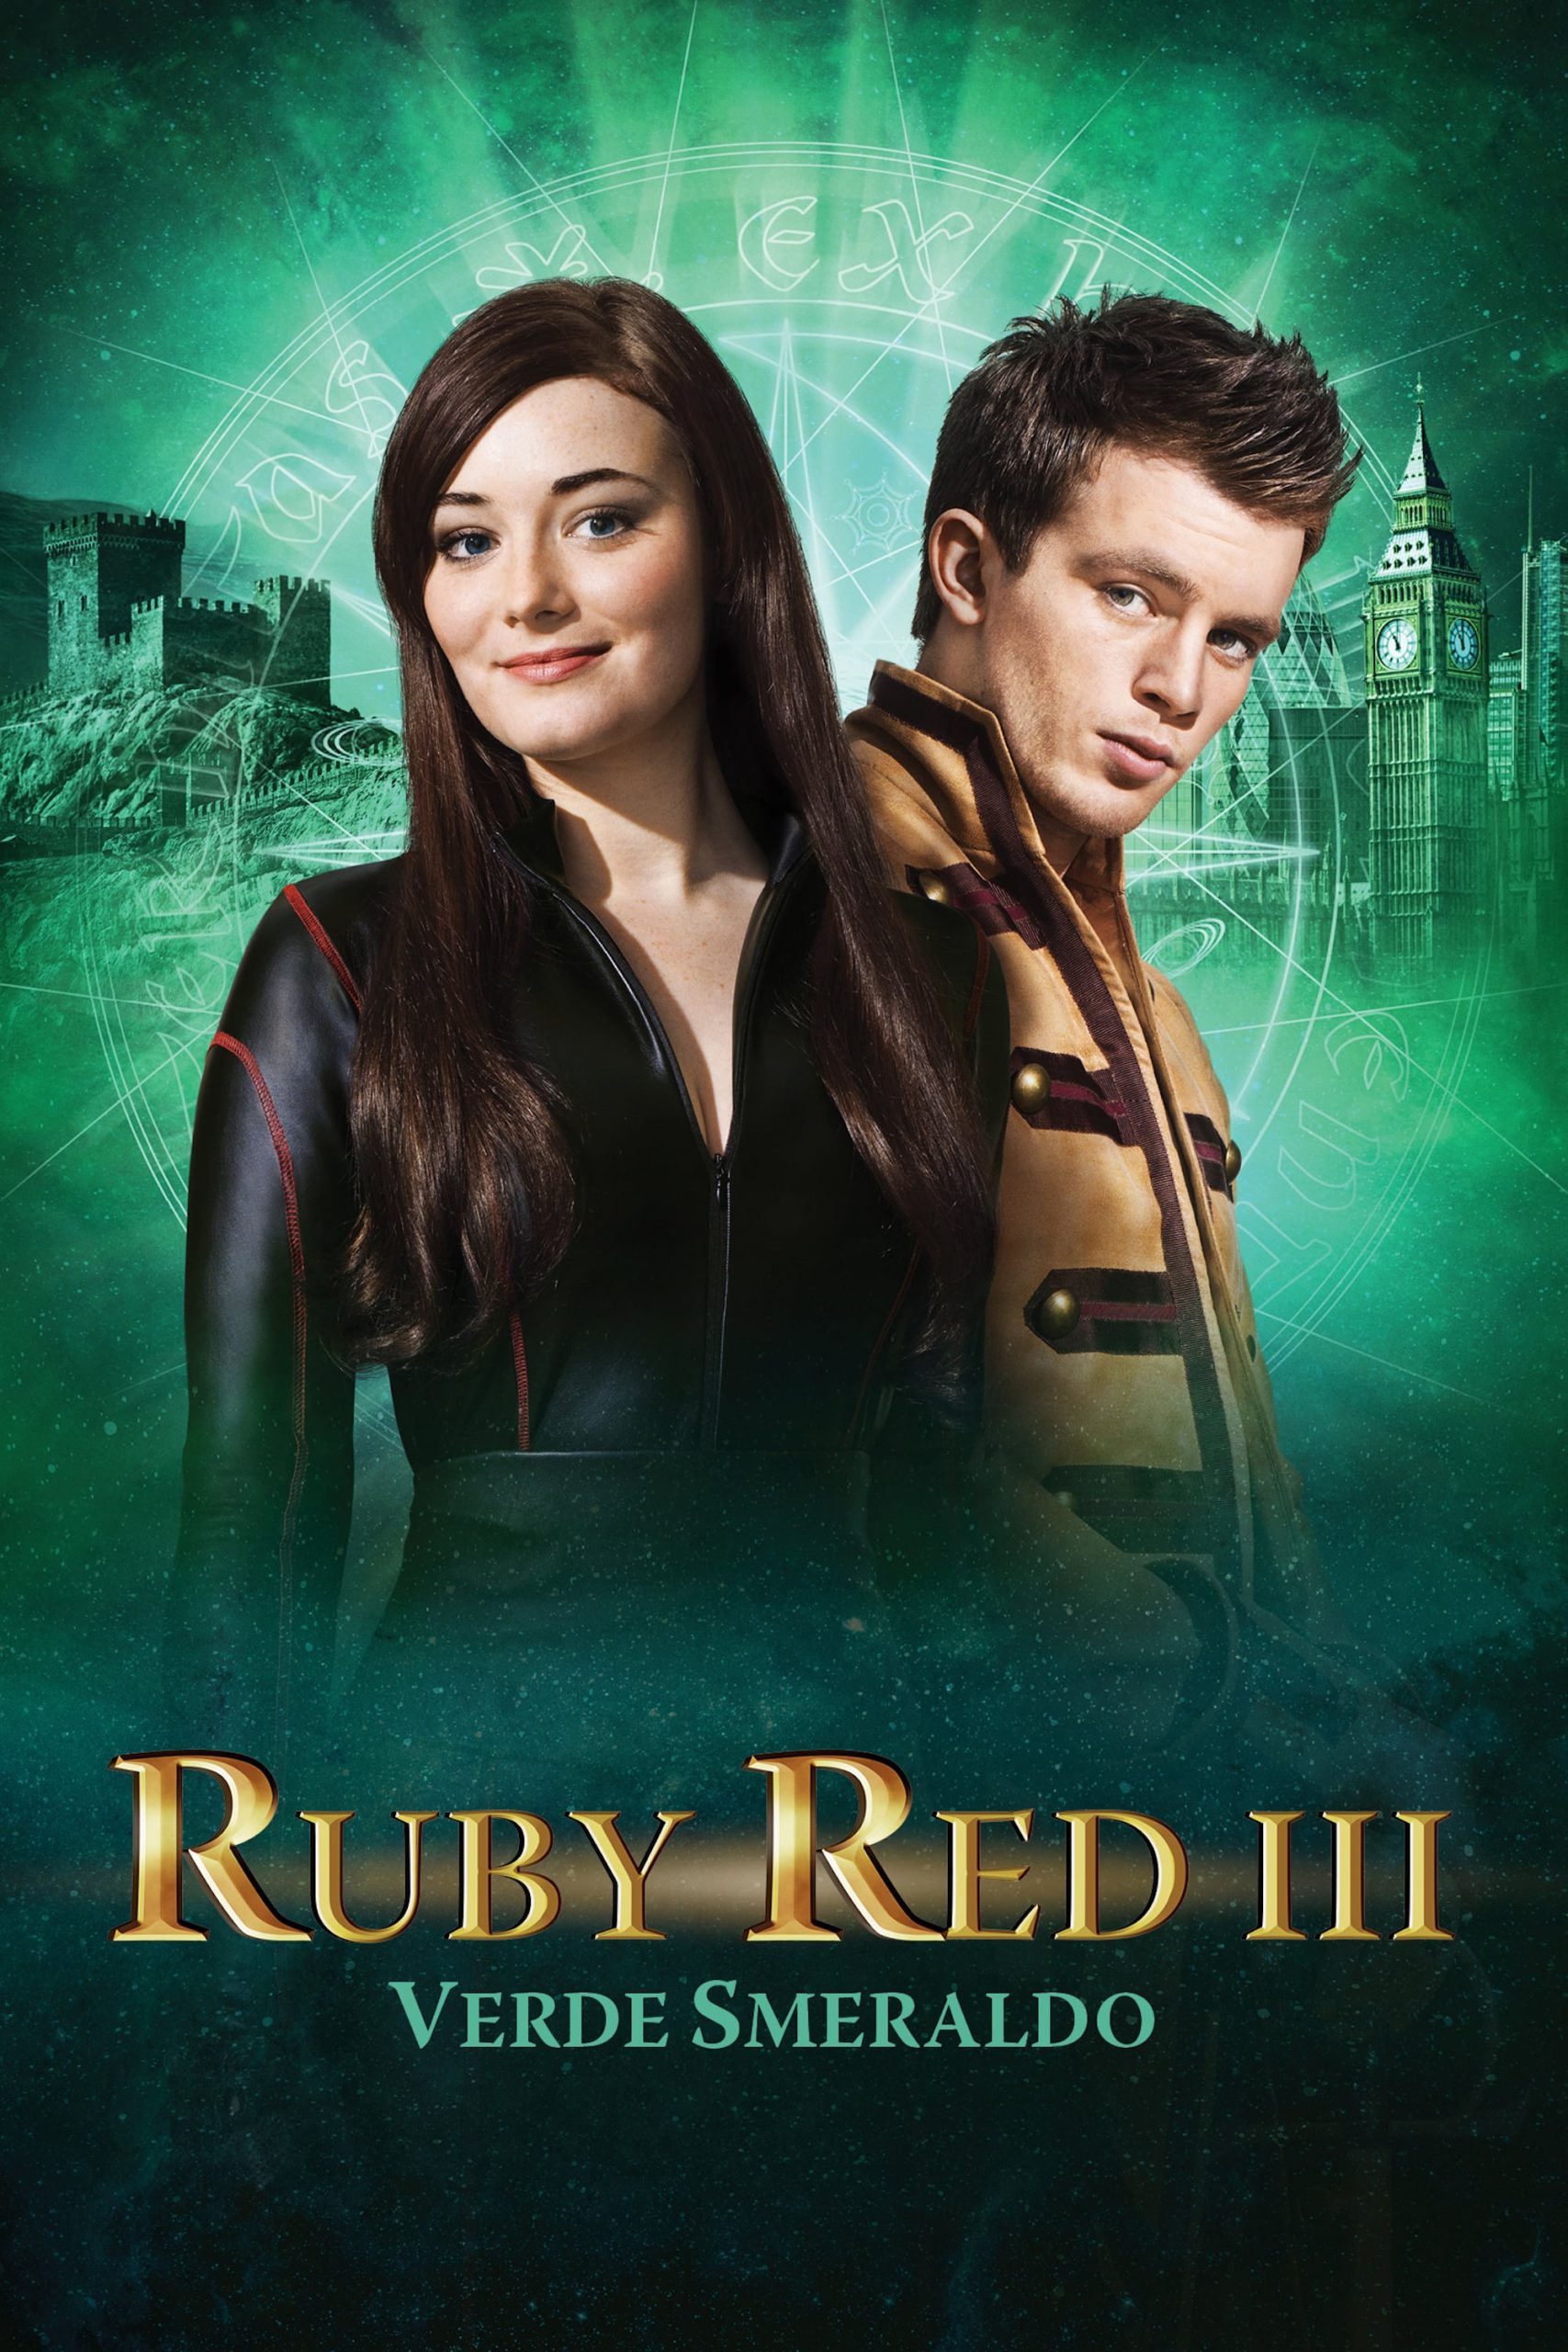 Ruby Red 3 – Verde smeraldo [HD] (2016)